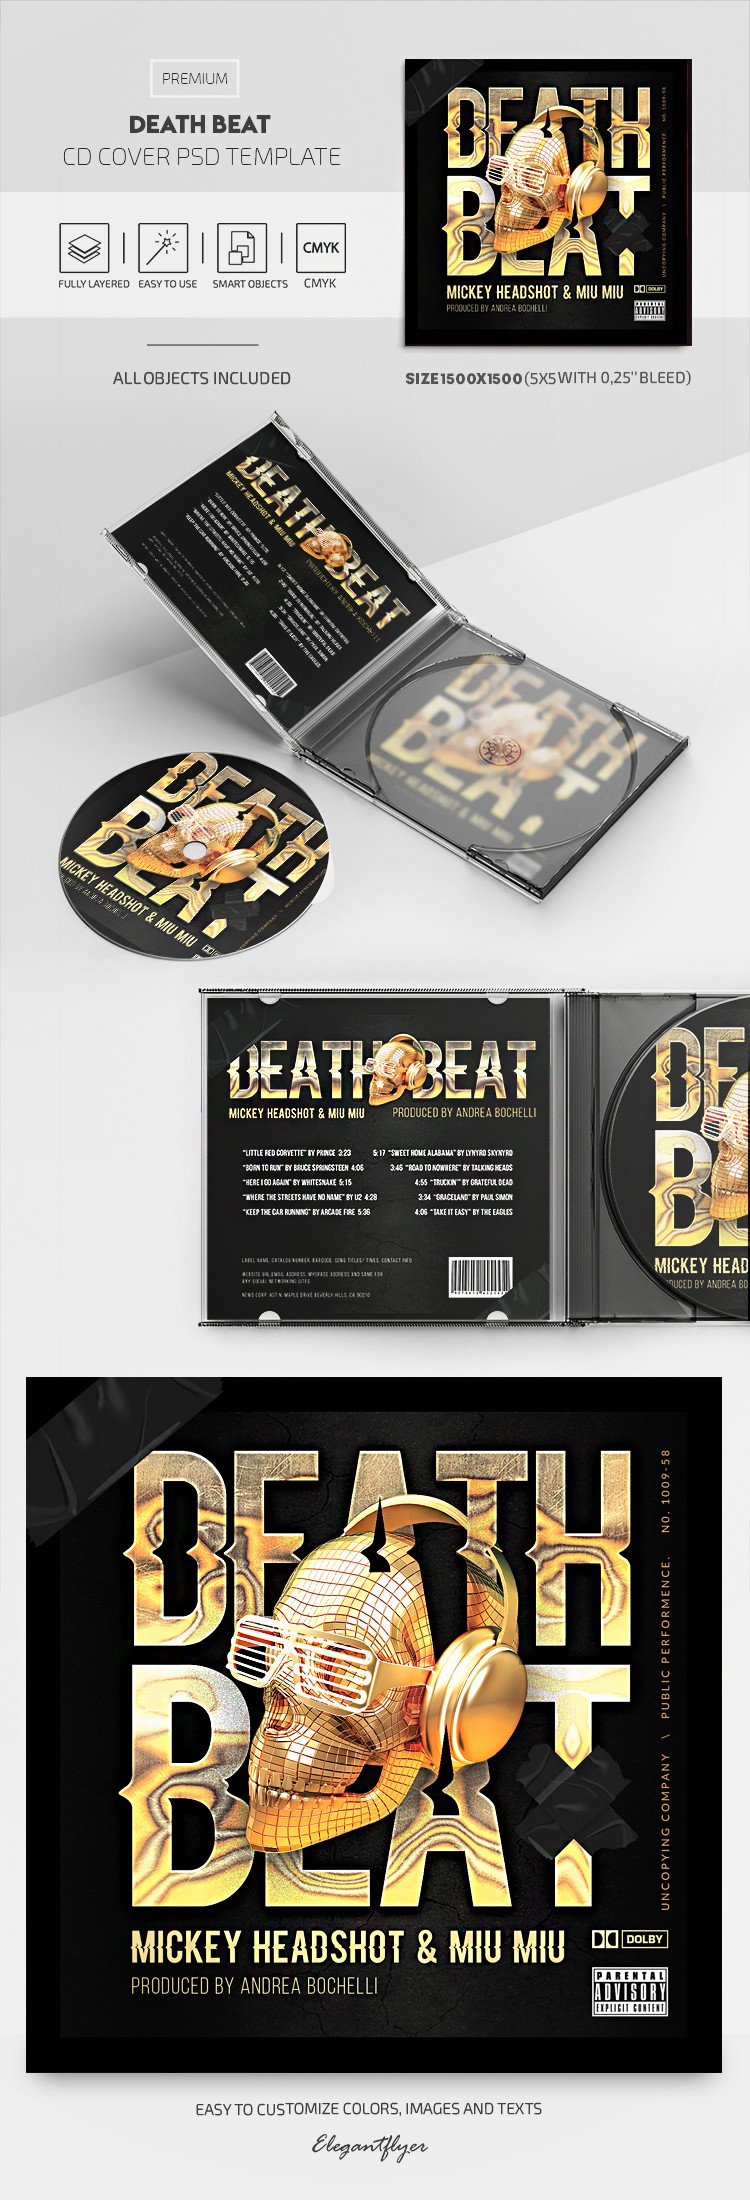 Death Beat CD Cover by ElegantFlyer